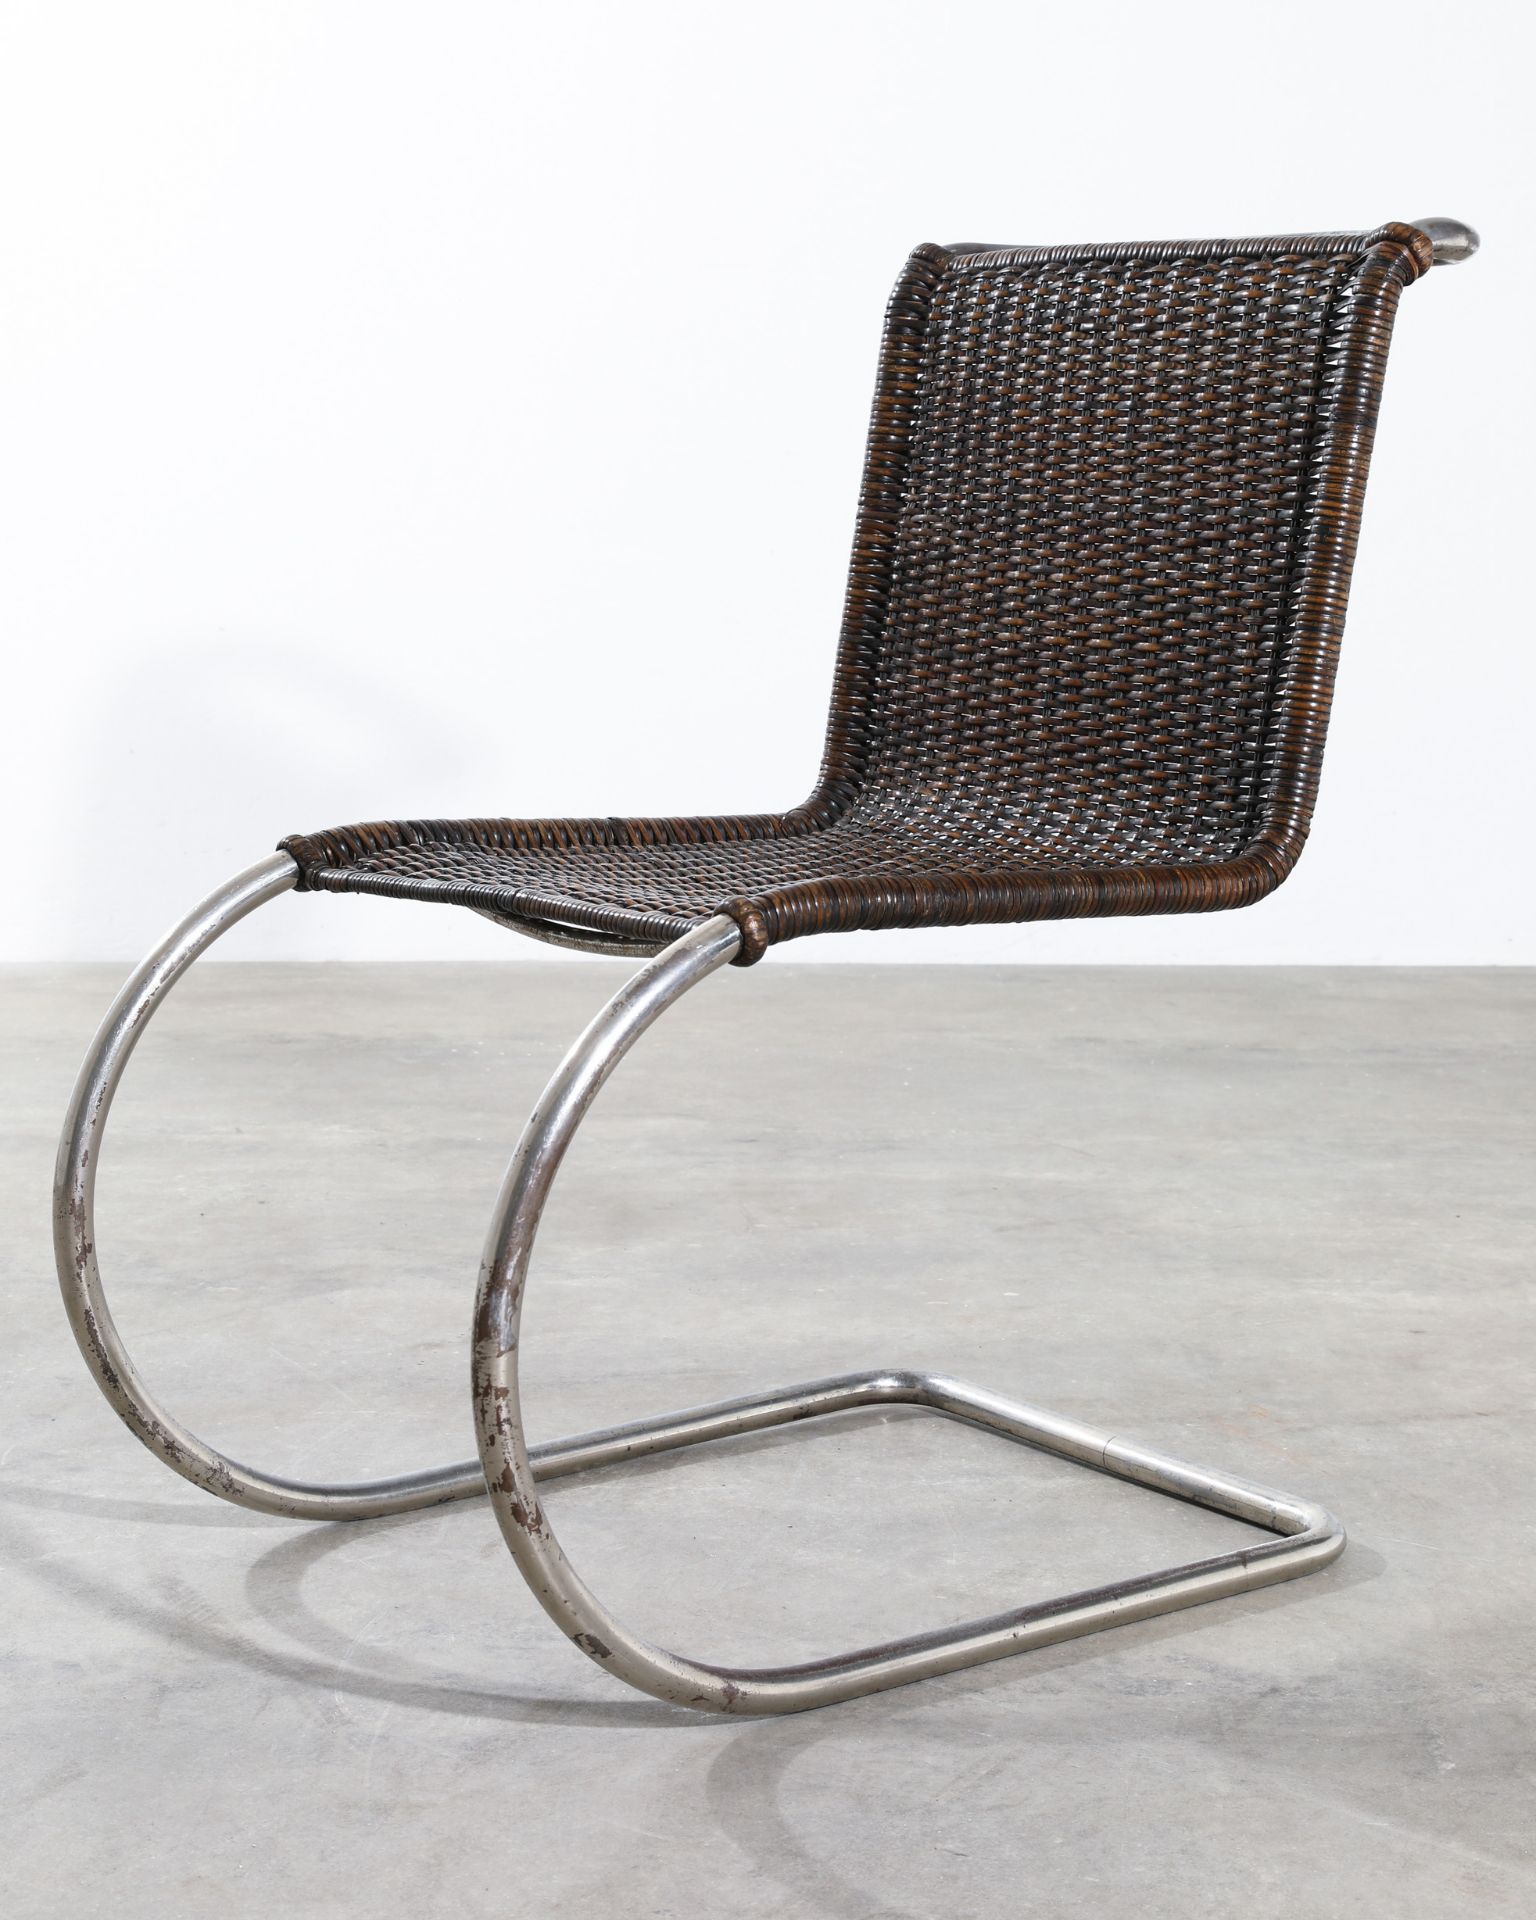 L. Mies van der Rohe, Thonet, early Chair Model MR10 / MR533